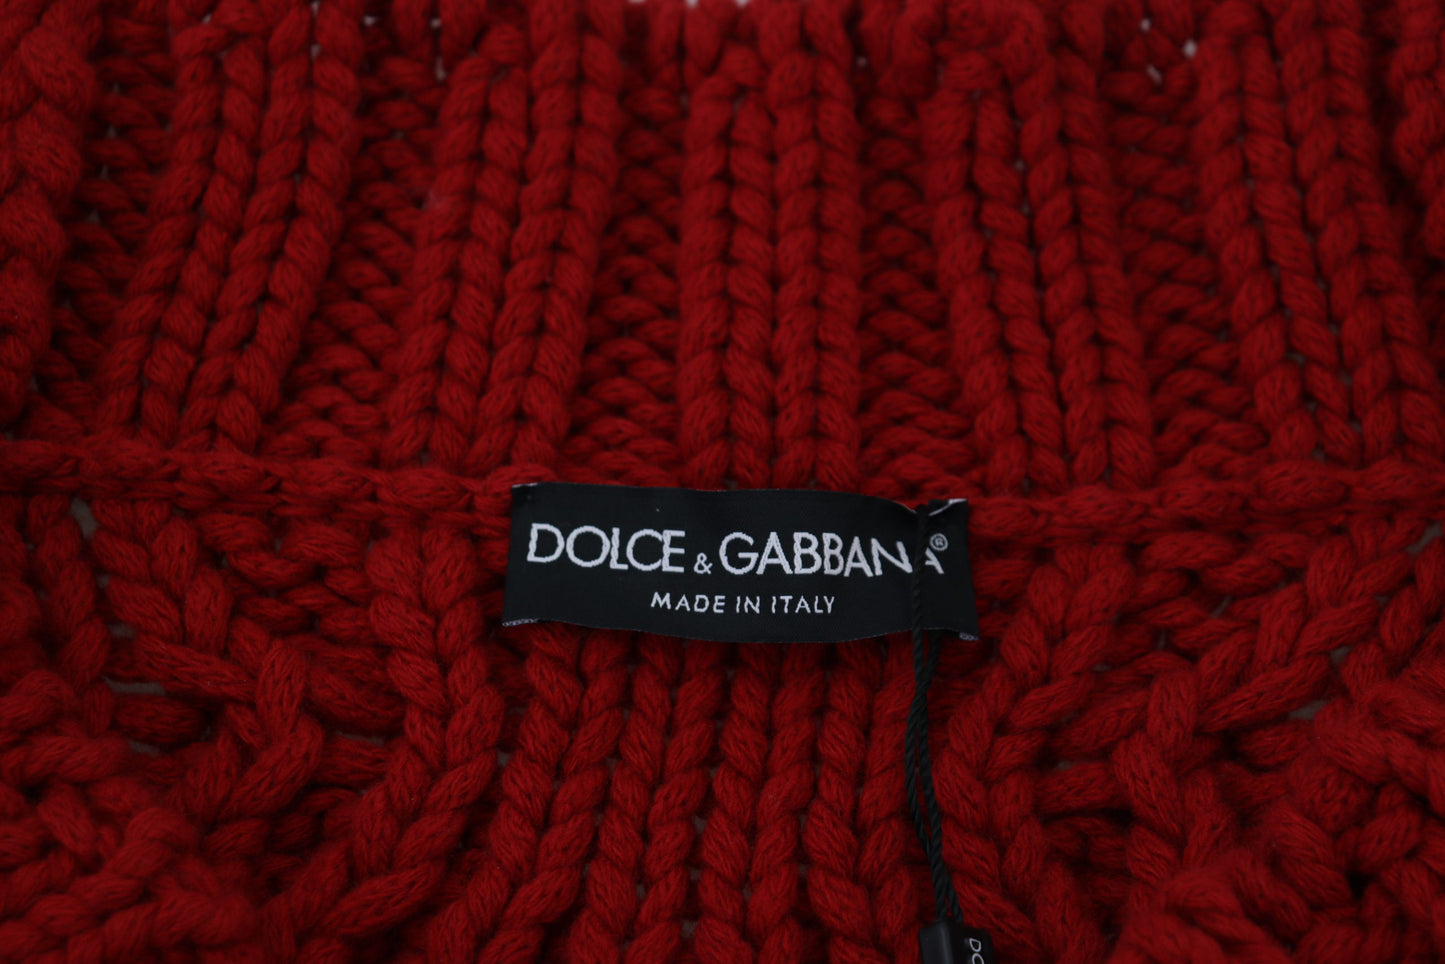 Dolce & Gabbana Elegant Red Virgin Wool Cardigan